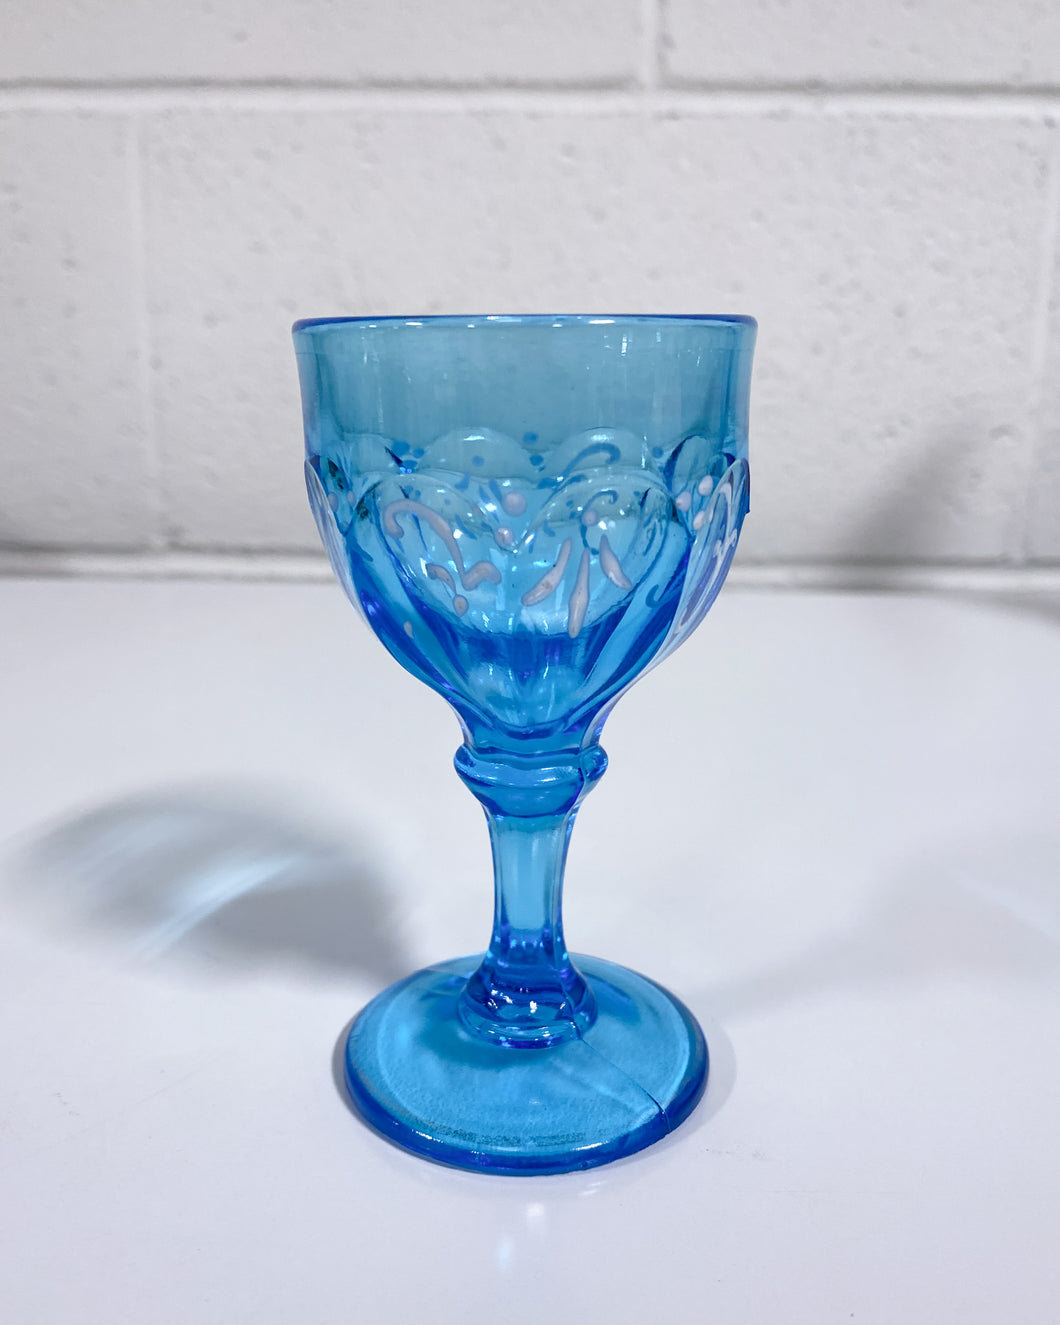 Mini Blue Glass Goblet